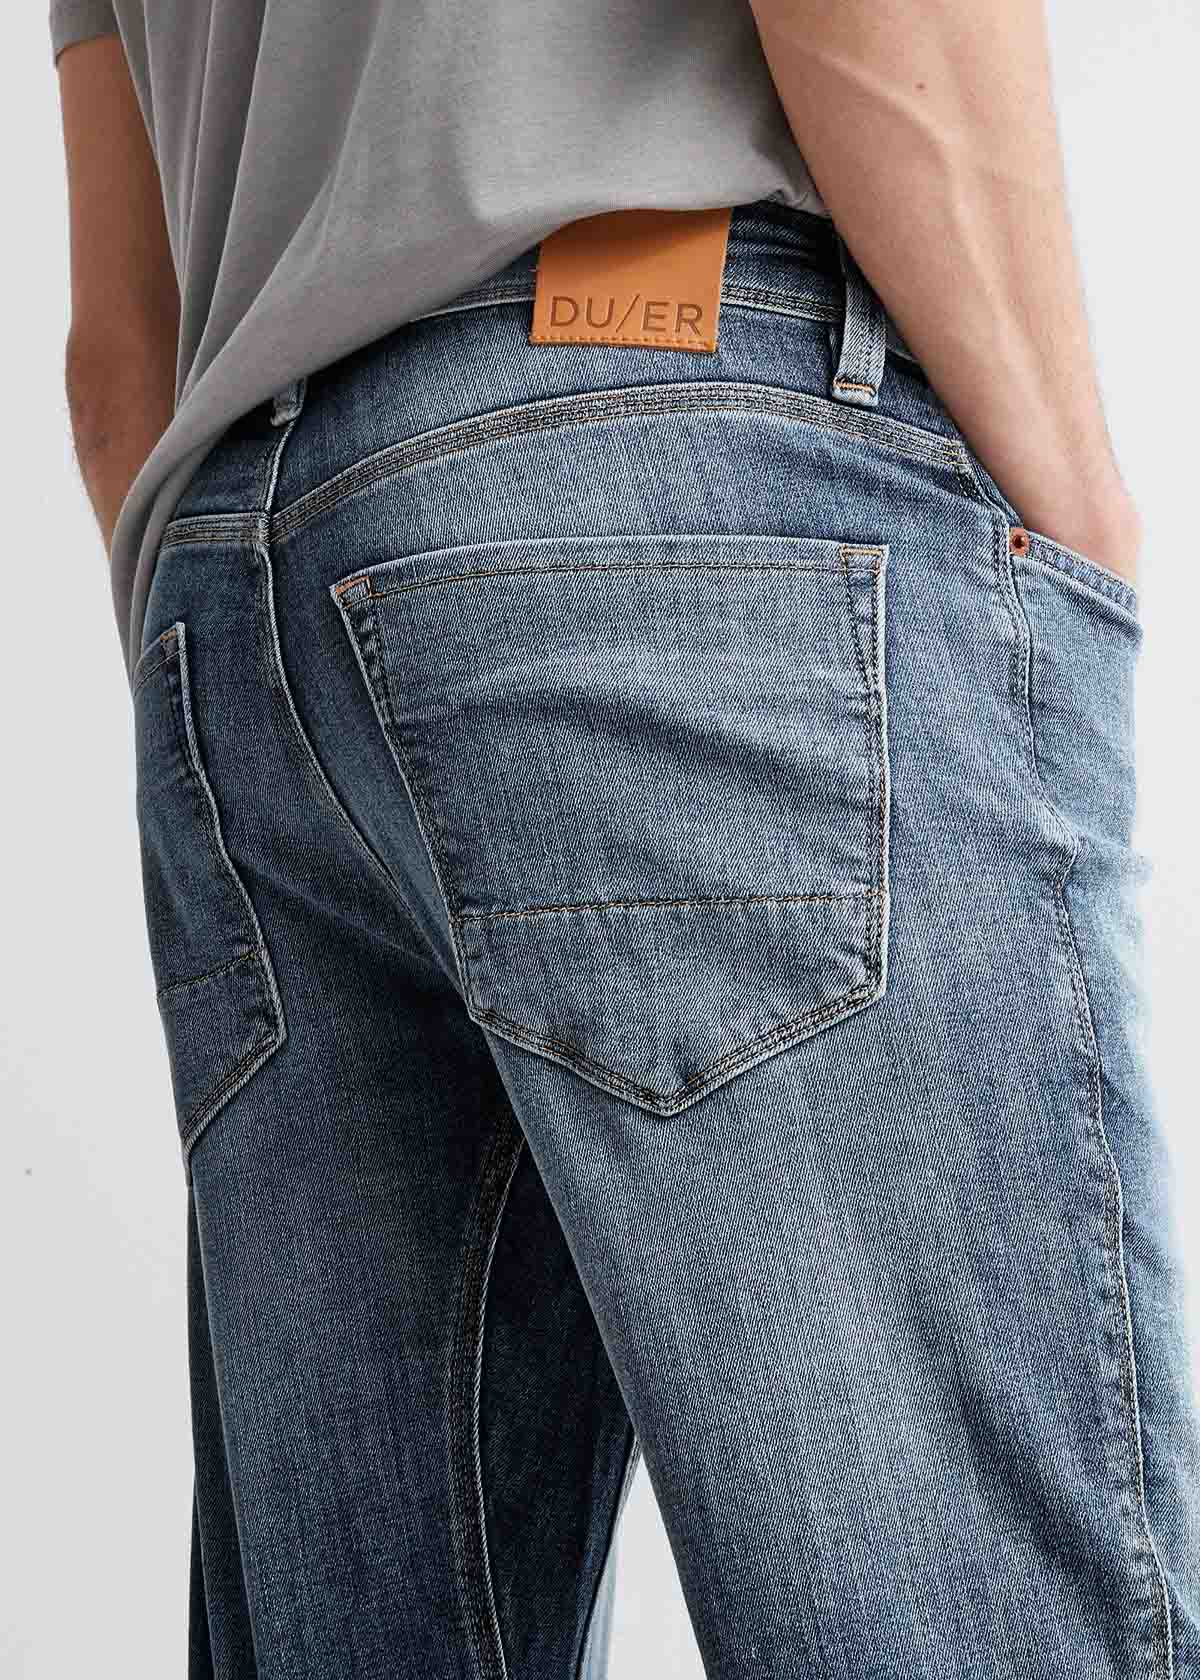 mens slim fit light blue stretch jeans back pocket and patch